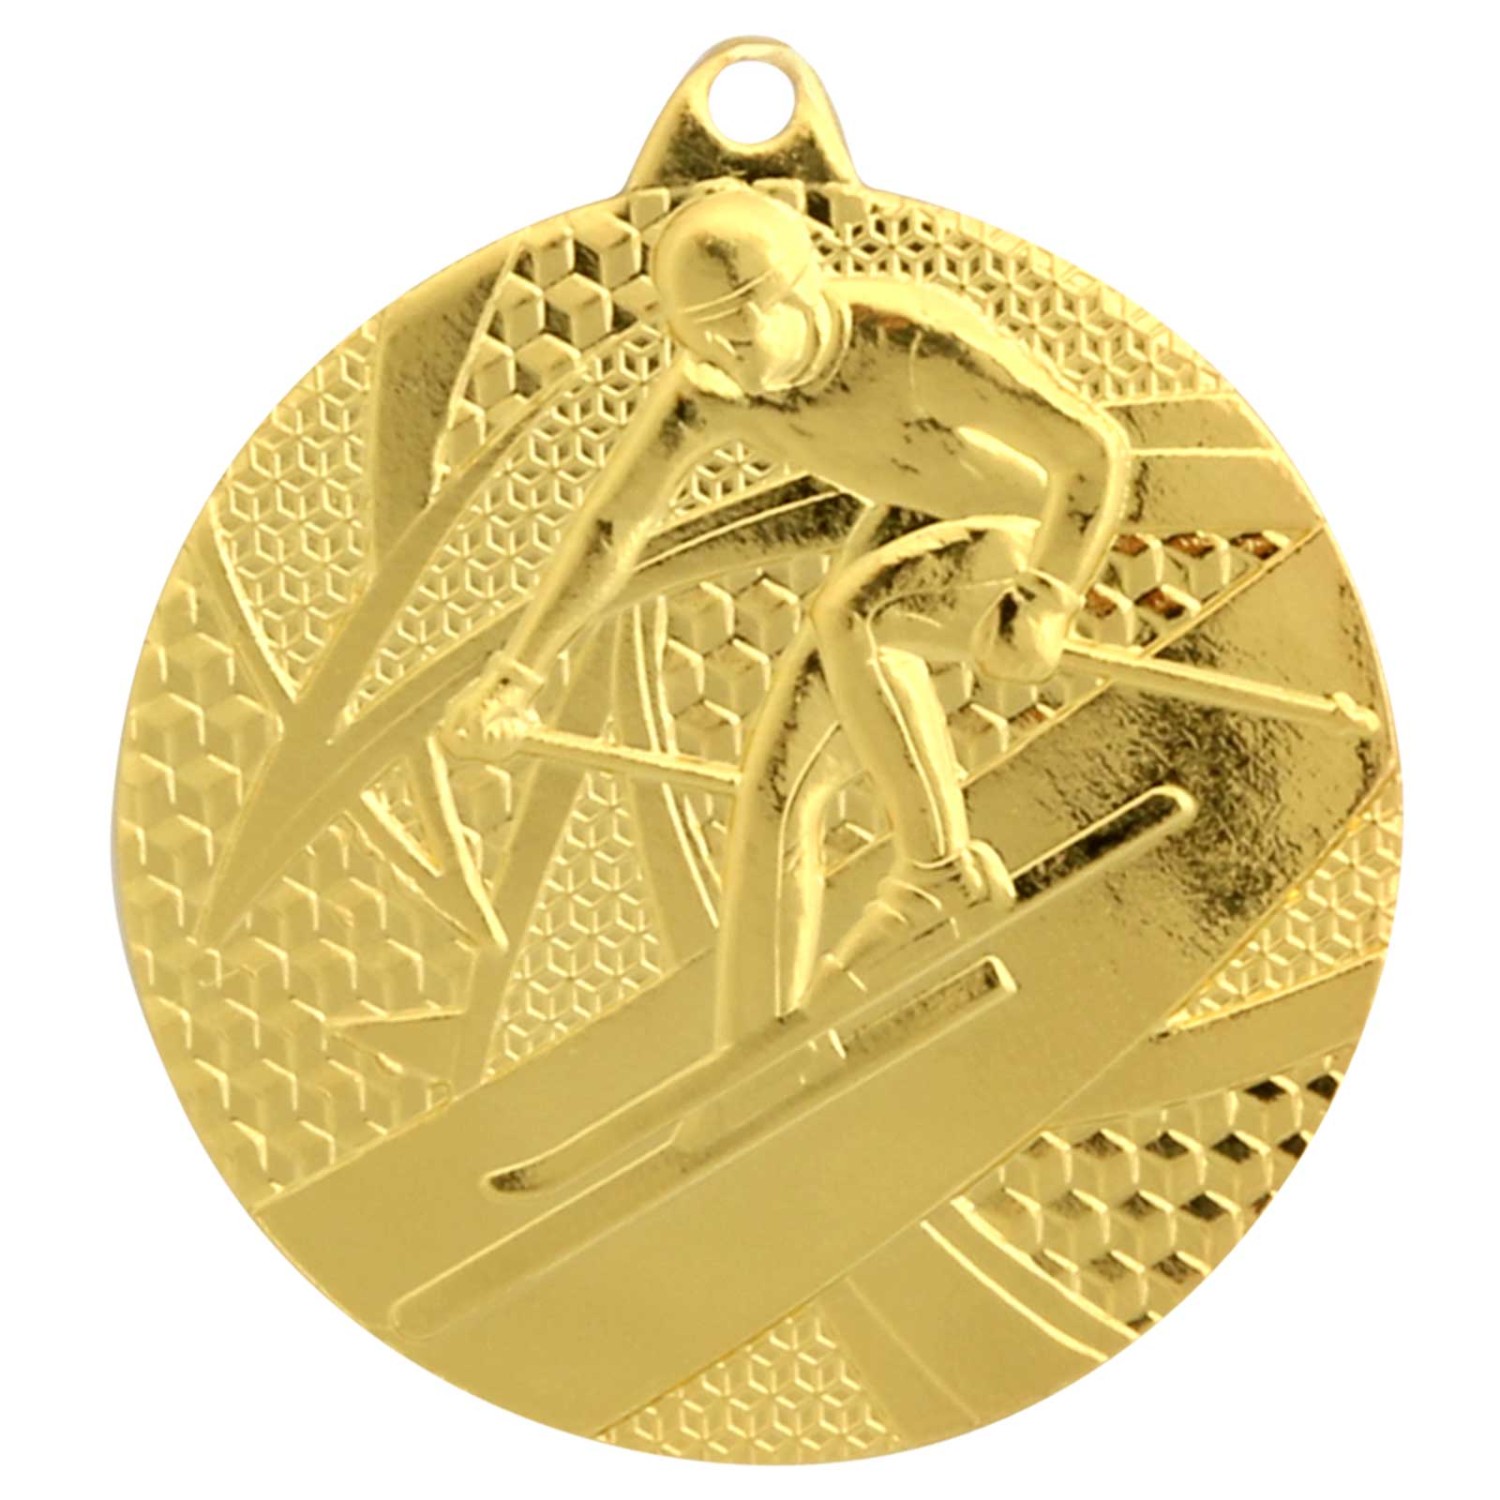 Medaille Ski Wintersport Abfahrt gold silber bronze 50 mm Stahl (Sorte: gold)